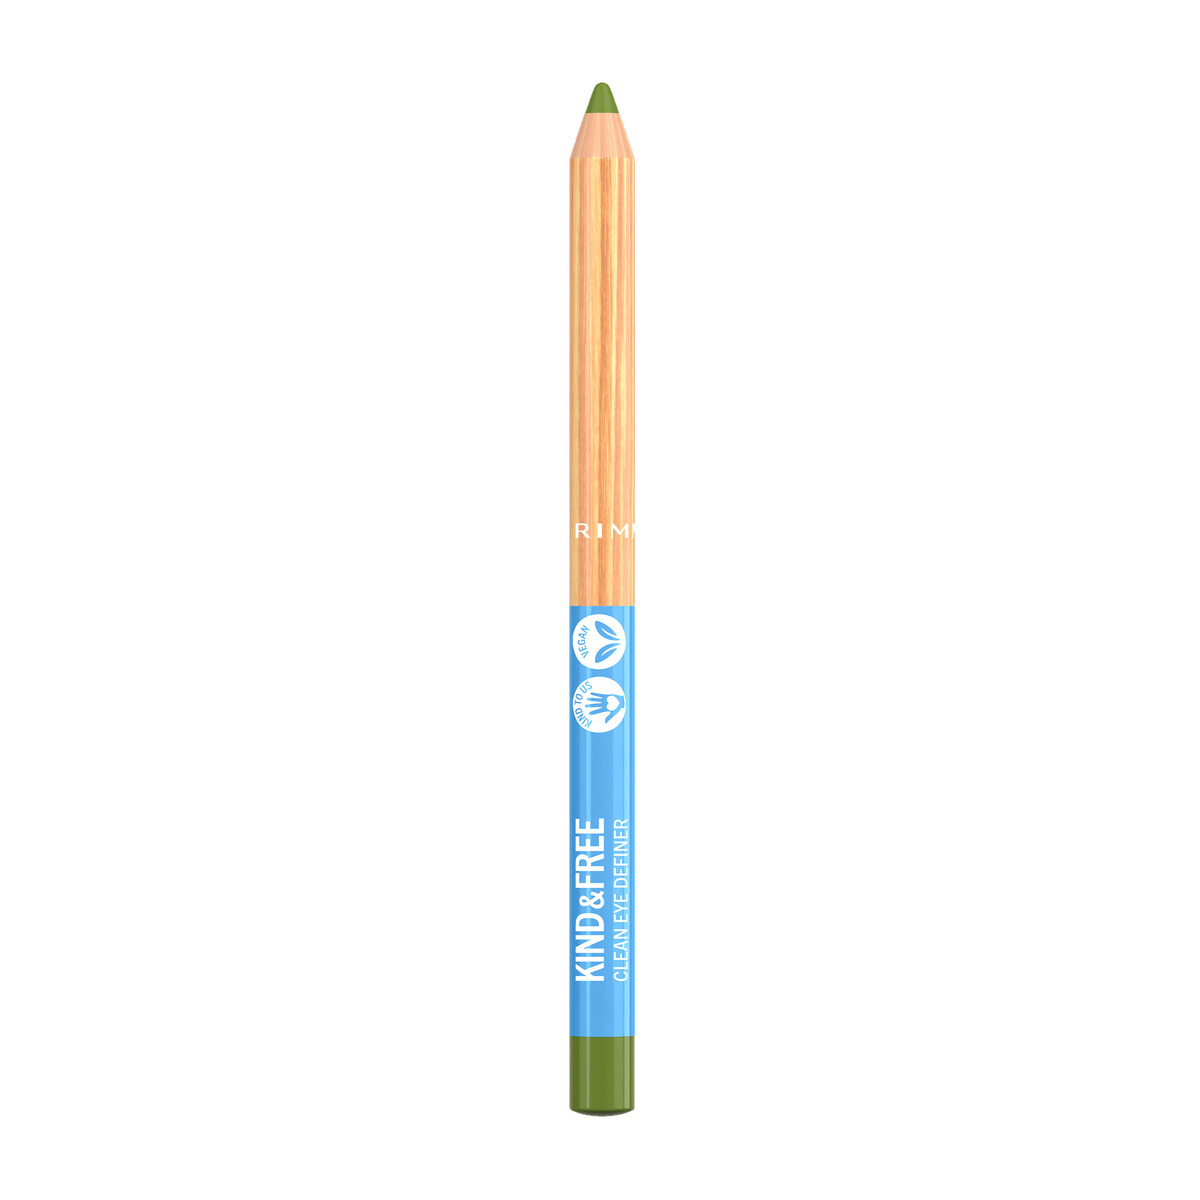 Rimmel London Kind & Free Clean Eyeliner Pencil, 004 Soft Orchard Green, 1.1 g